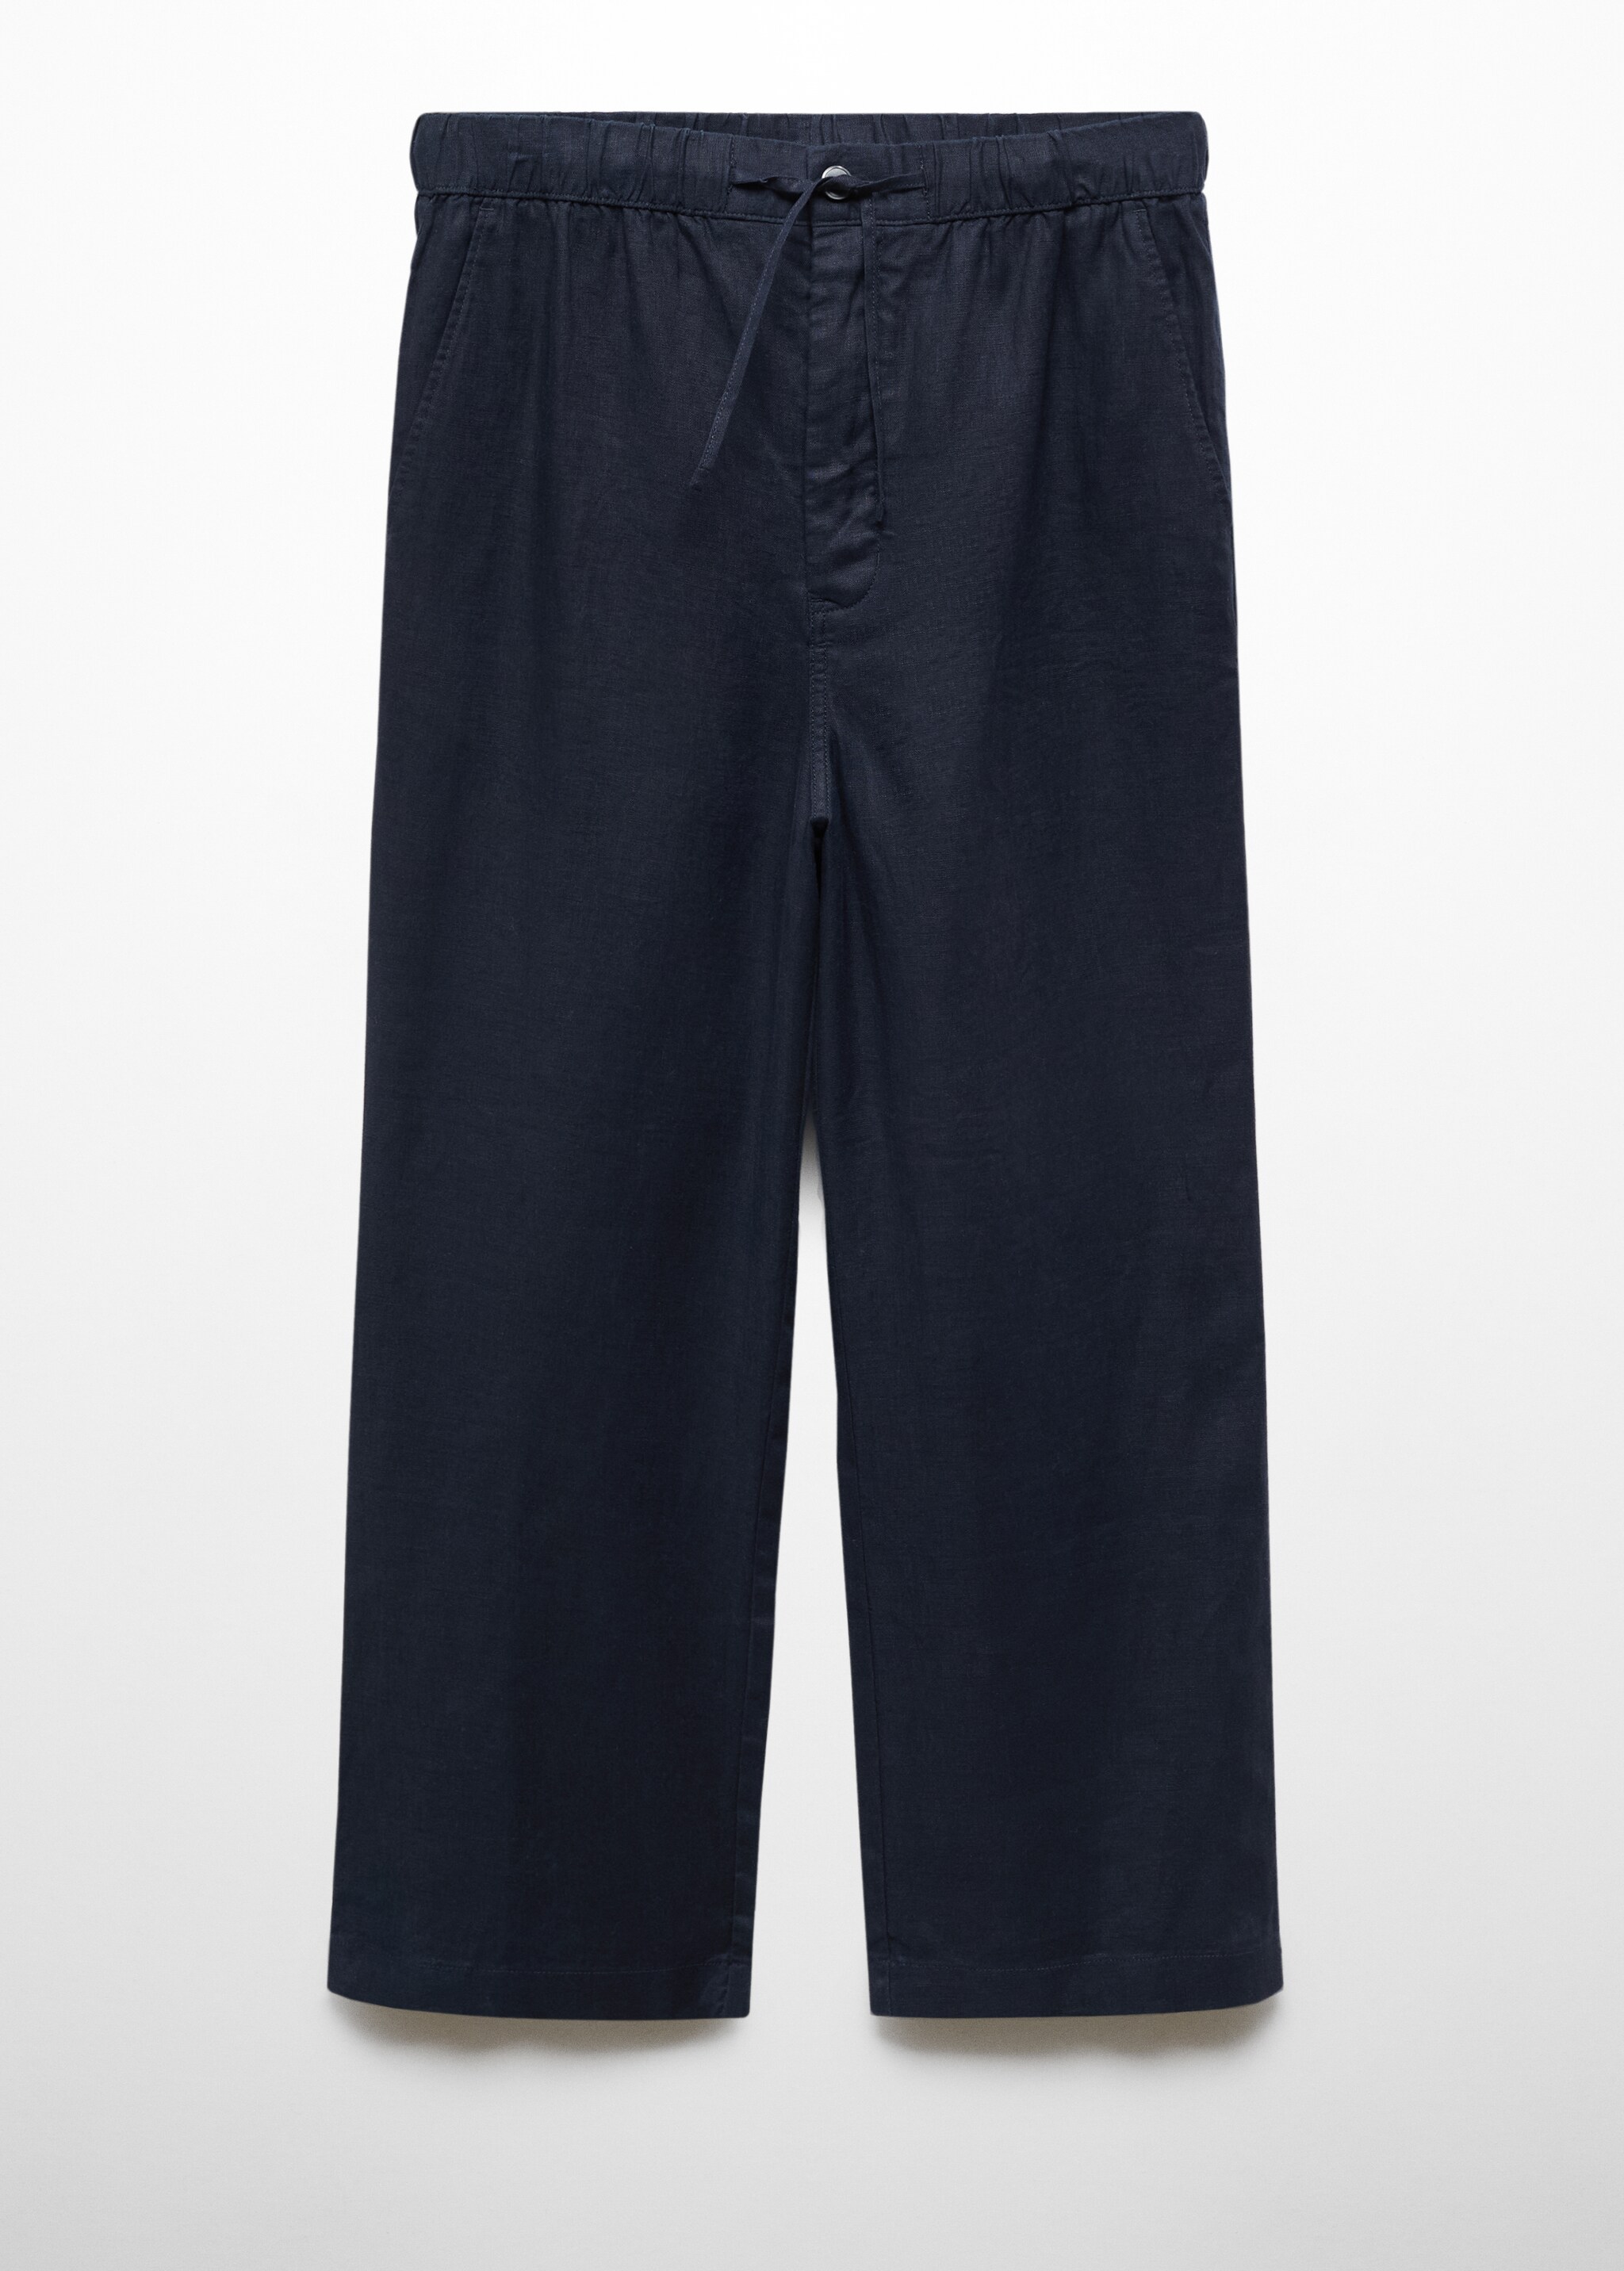 Pantalón 100% lino cordón - Artículo sin modelo